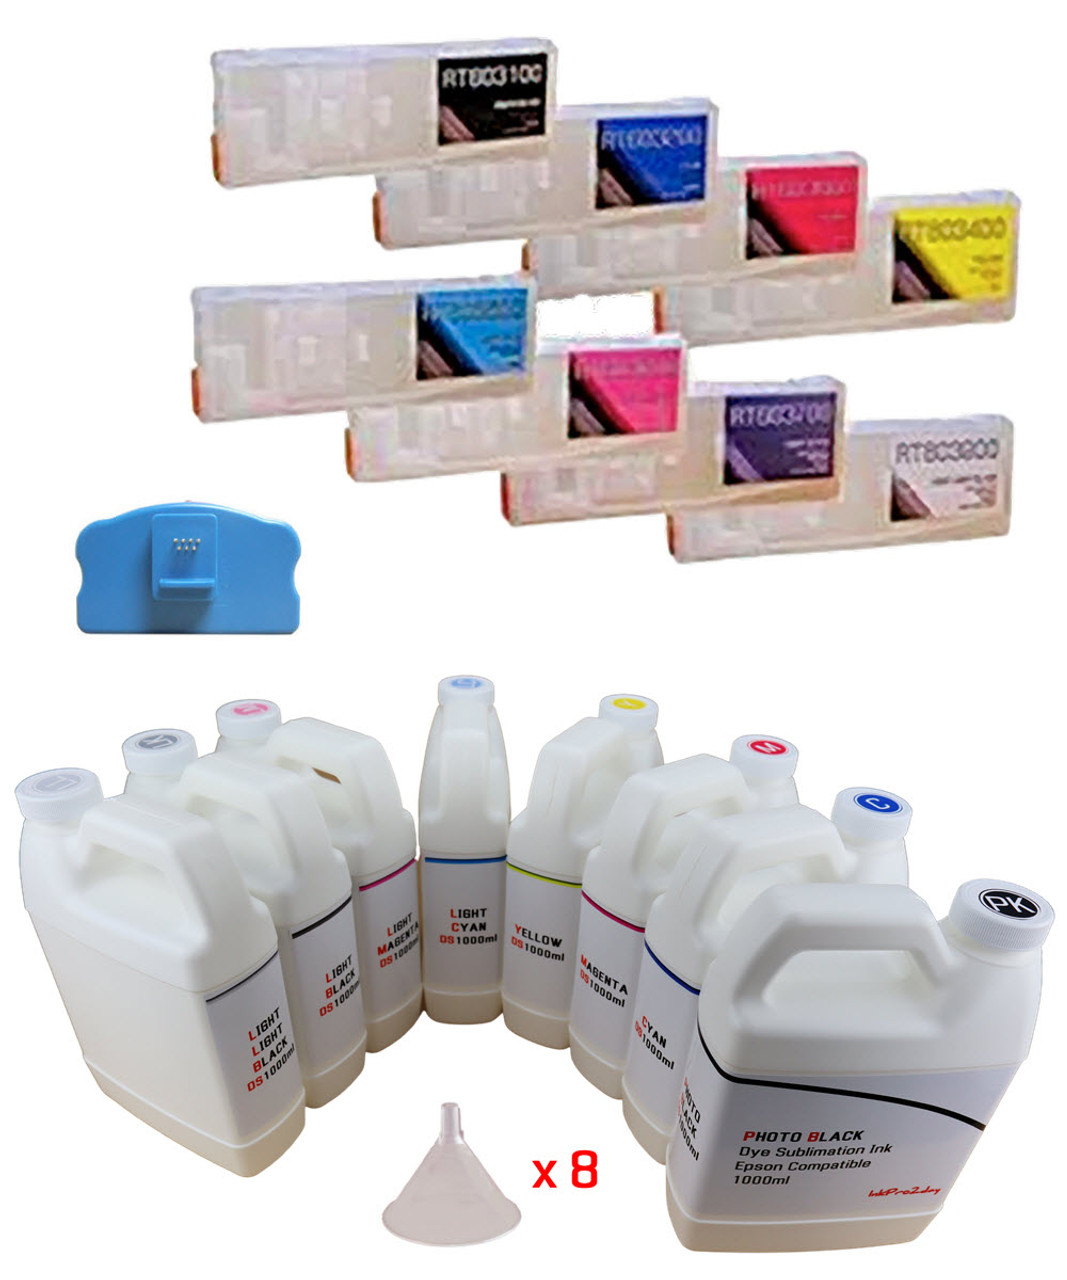 8 Refillable Ink Cartridges, 8 Bottles of Dye Sublimation Ink 1000ml Bottles for Epson Stylus Pro 7880, 9880 Printers